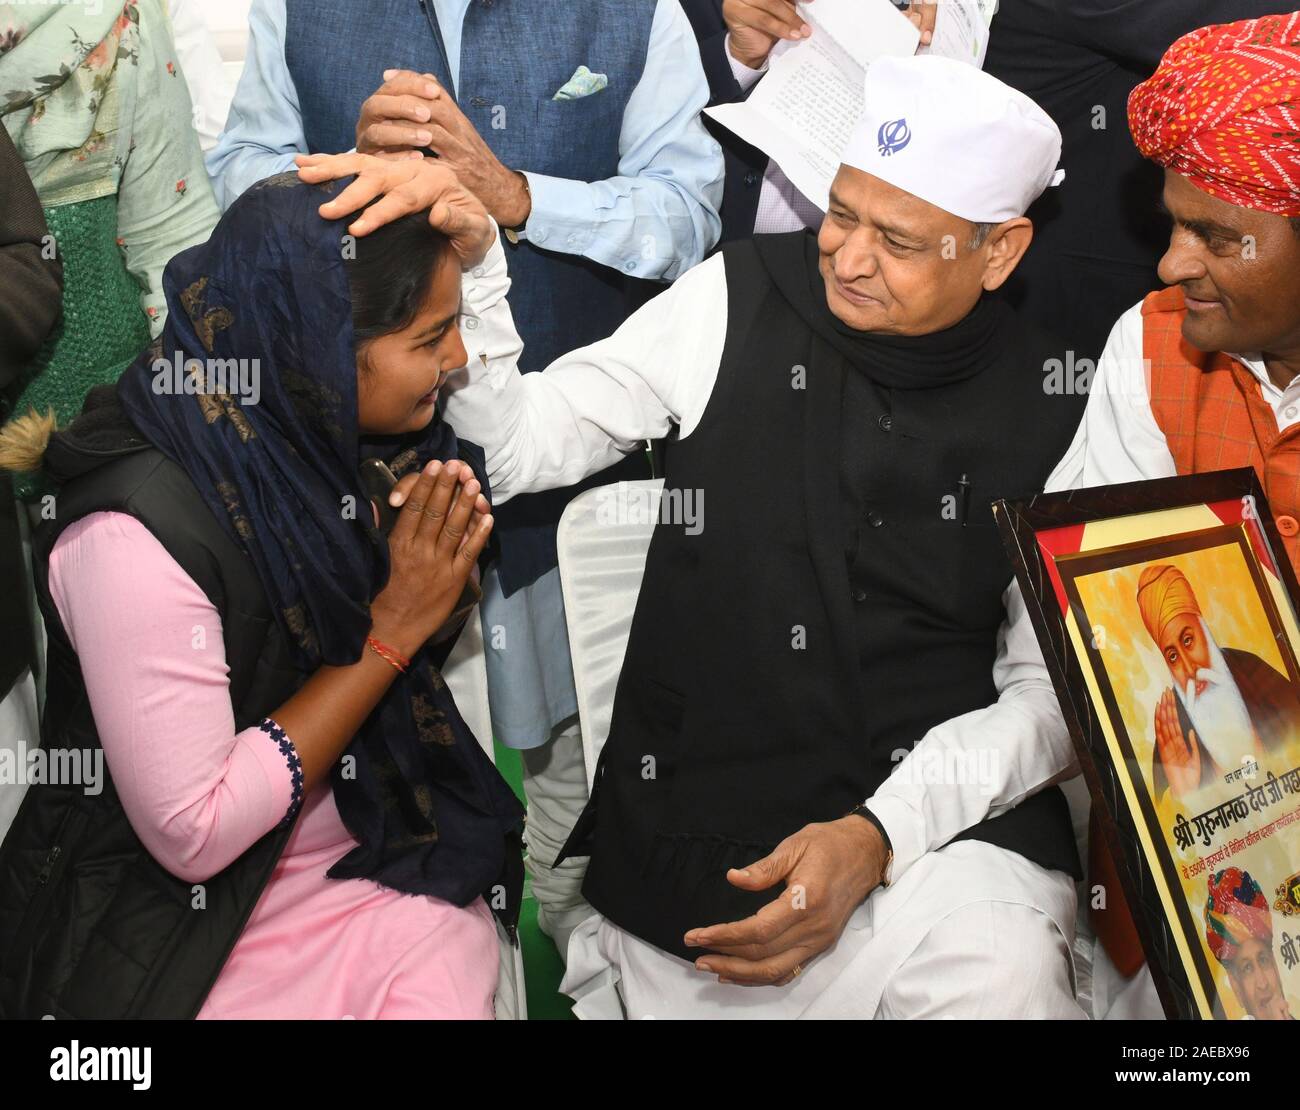 Rajasthan CM Ashok Gehlot blessings to a girl during the Shabad Kirtan held on the occasion of 550th birth anniversary of Shri Guru Nanak ji at Jaipur. Stock Photo